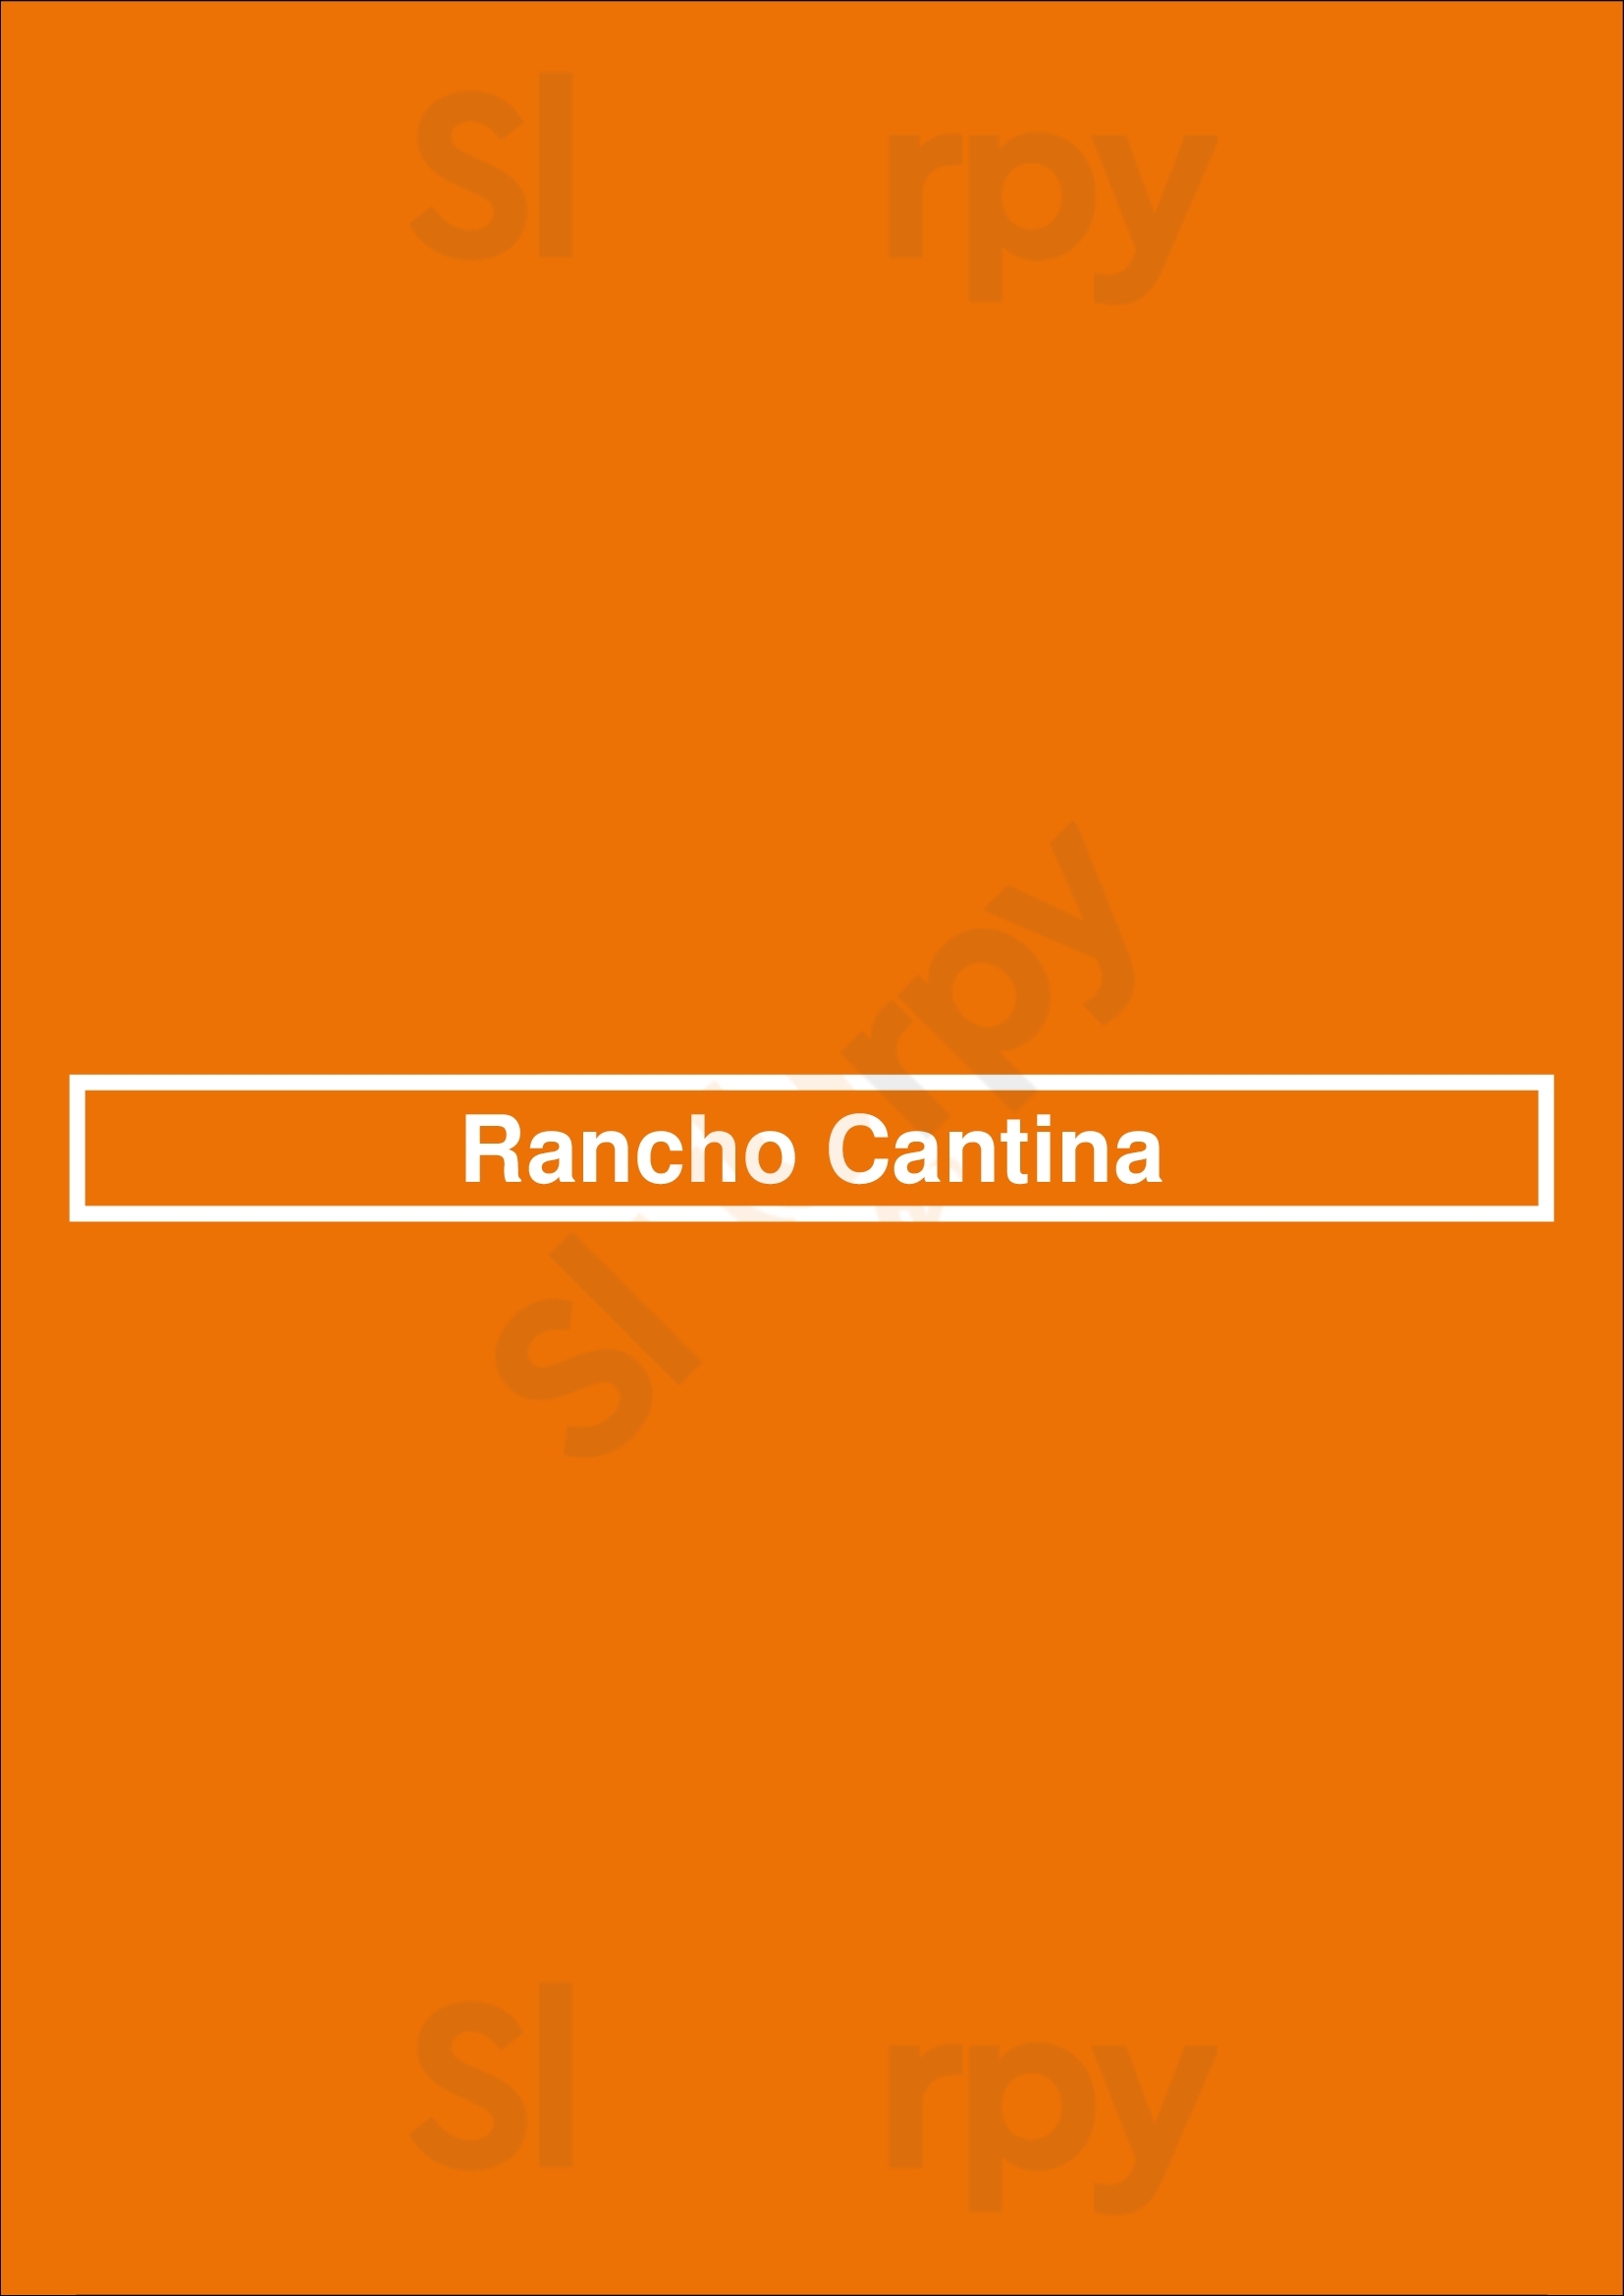 Rancho Cantina Lafayette Menu - 1